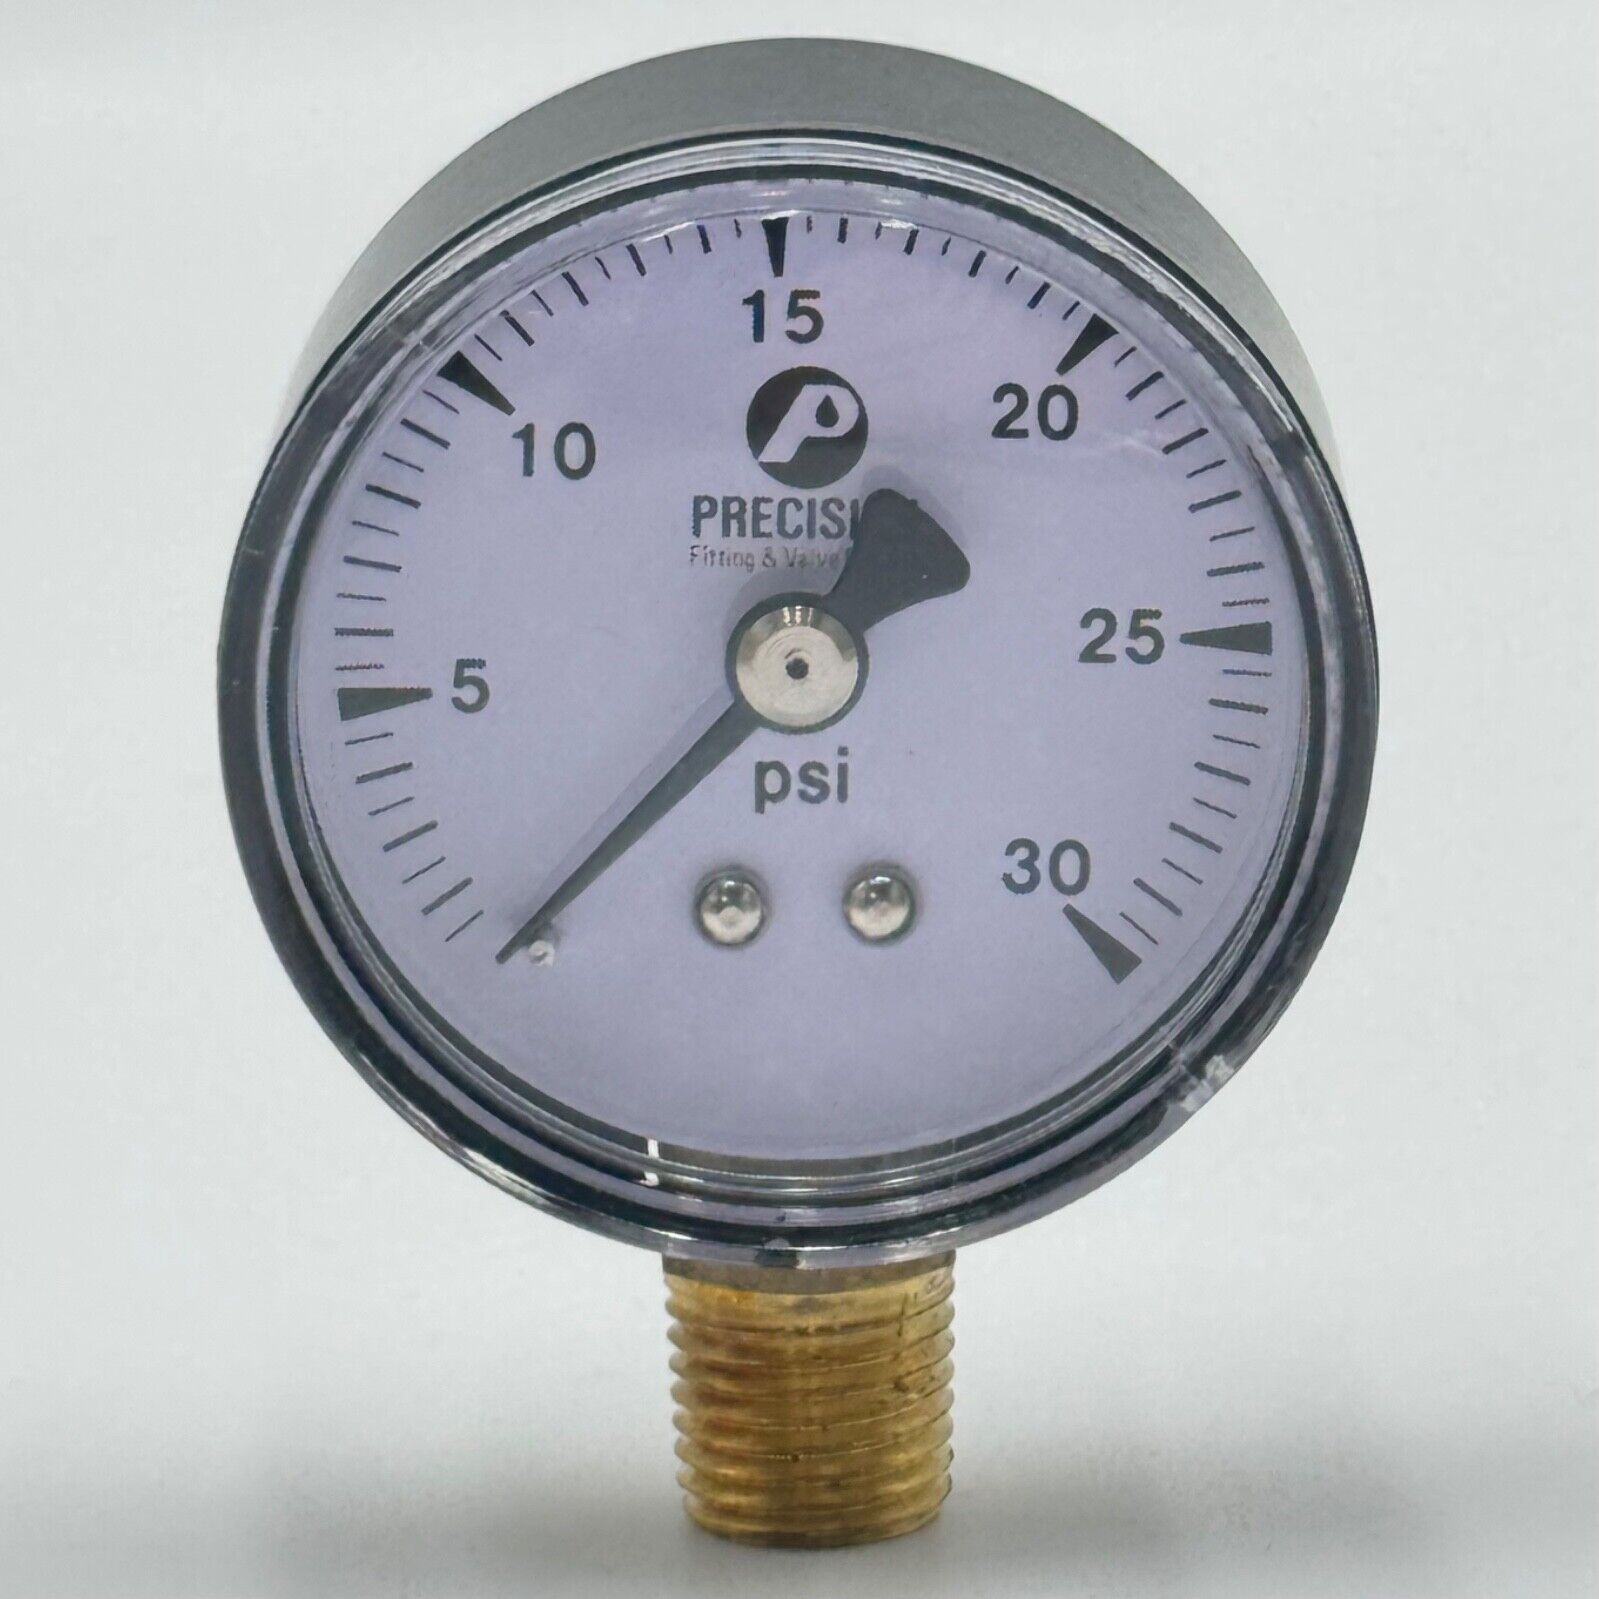 Precision Pressure Gauge SG302 0-30psi 1/2” Bottom Mount Thread 2” Face NIB